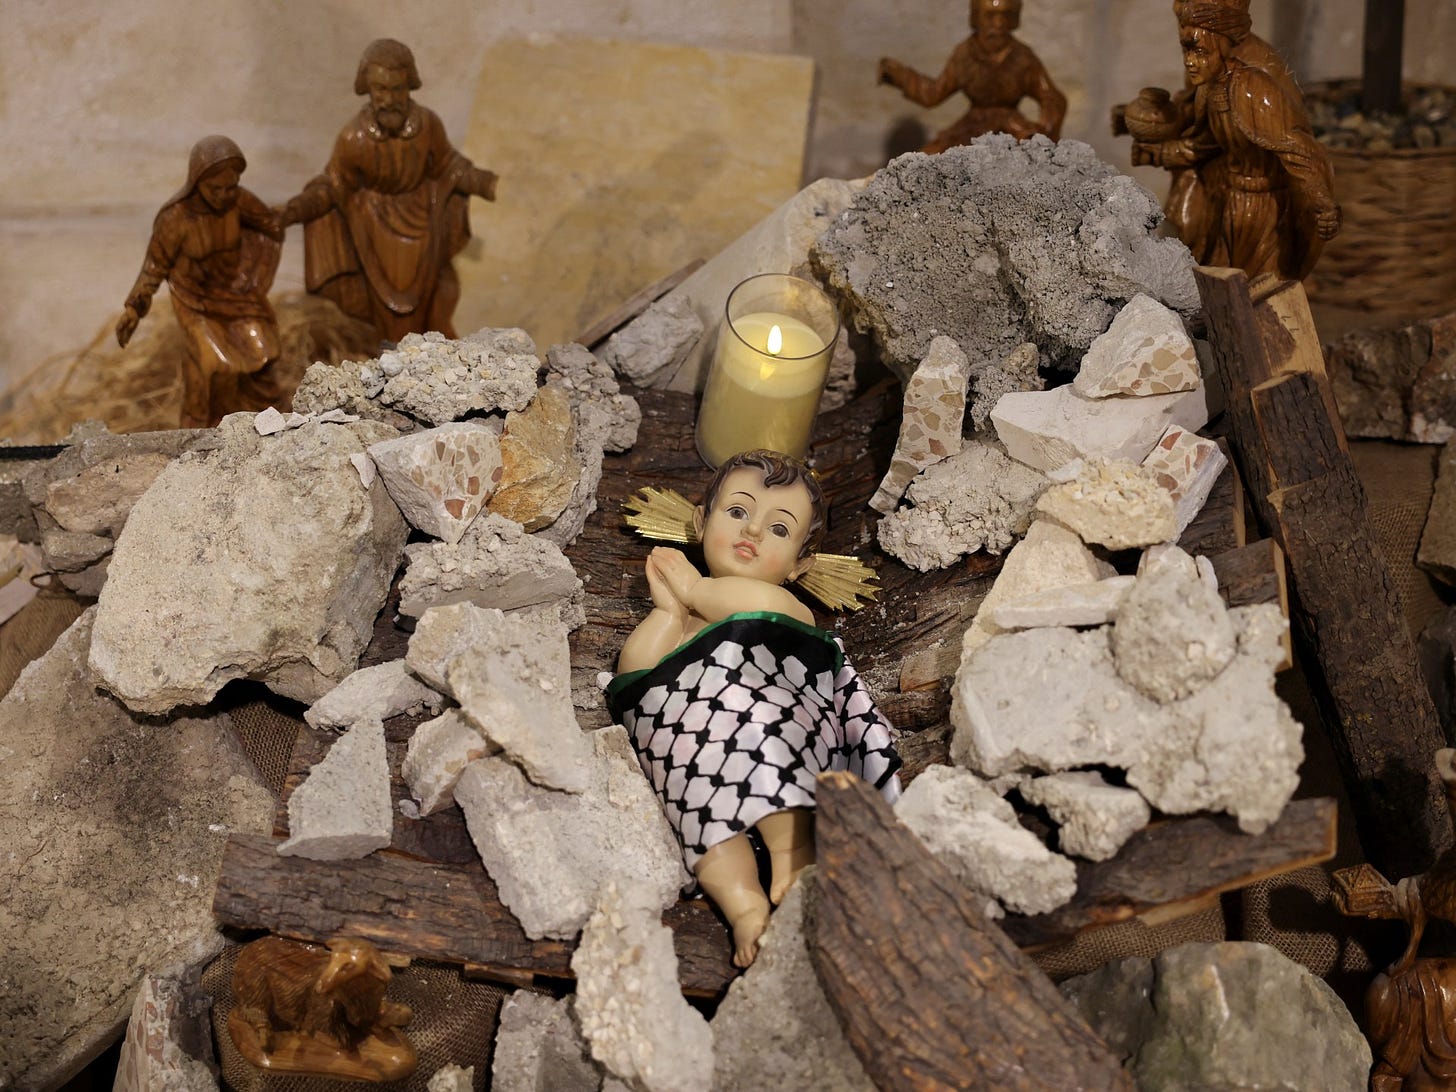 Nativity scene places baby Jesus in rubble